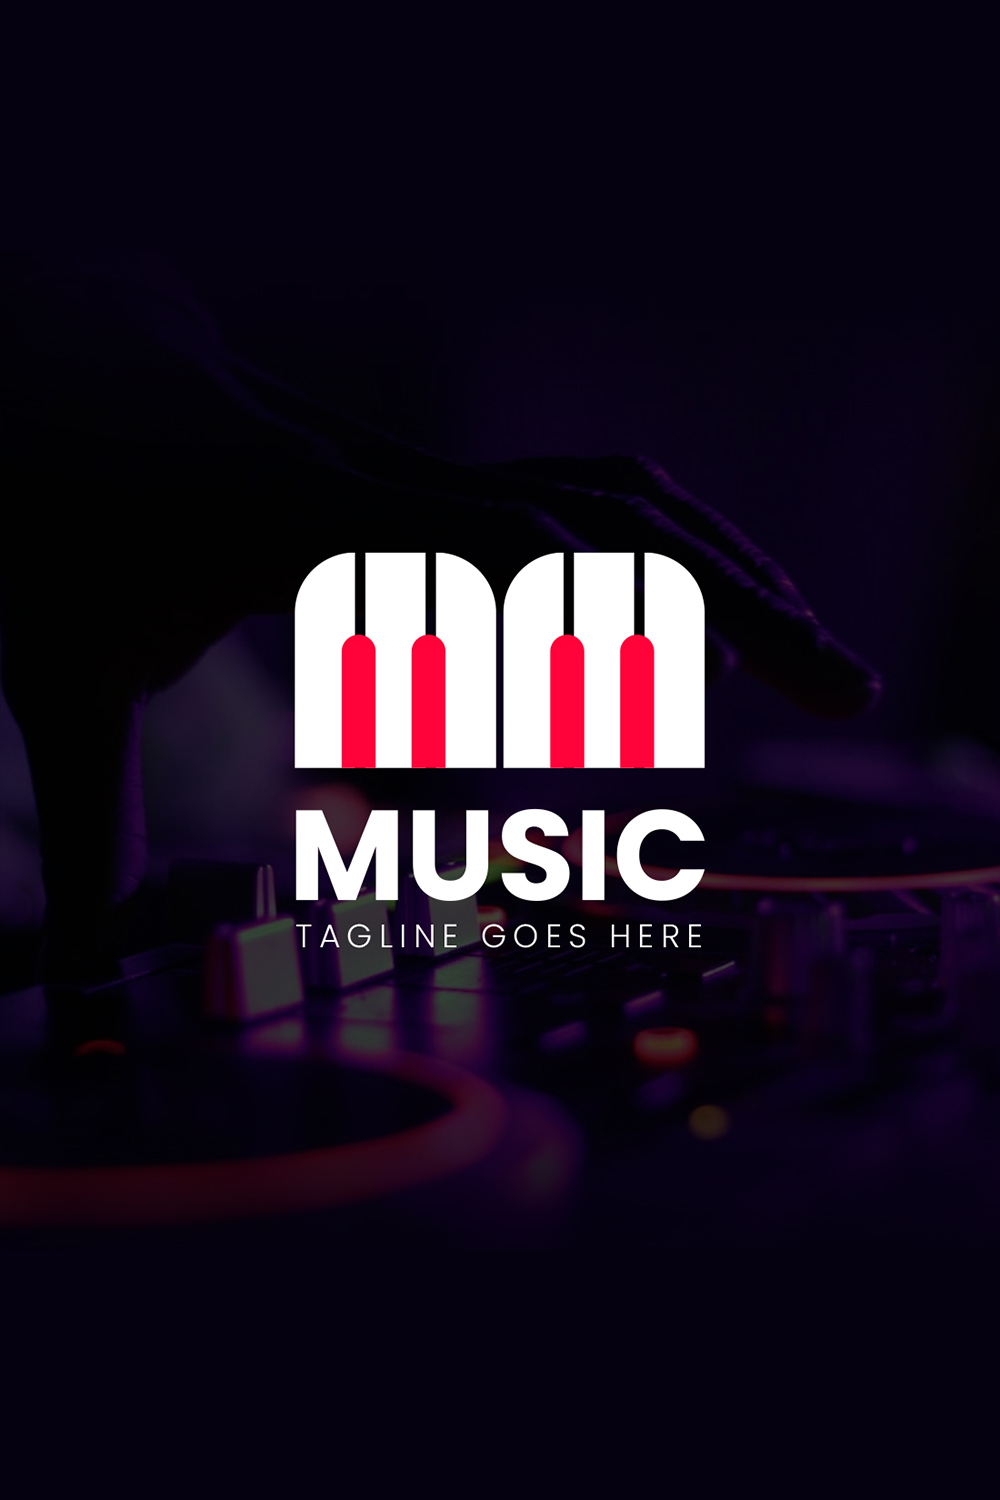 Music logo pinterest preview image.